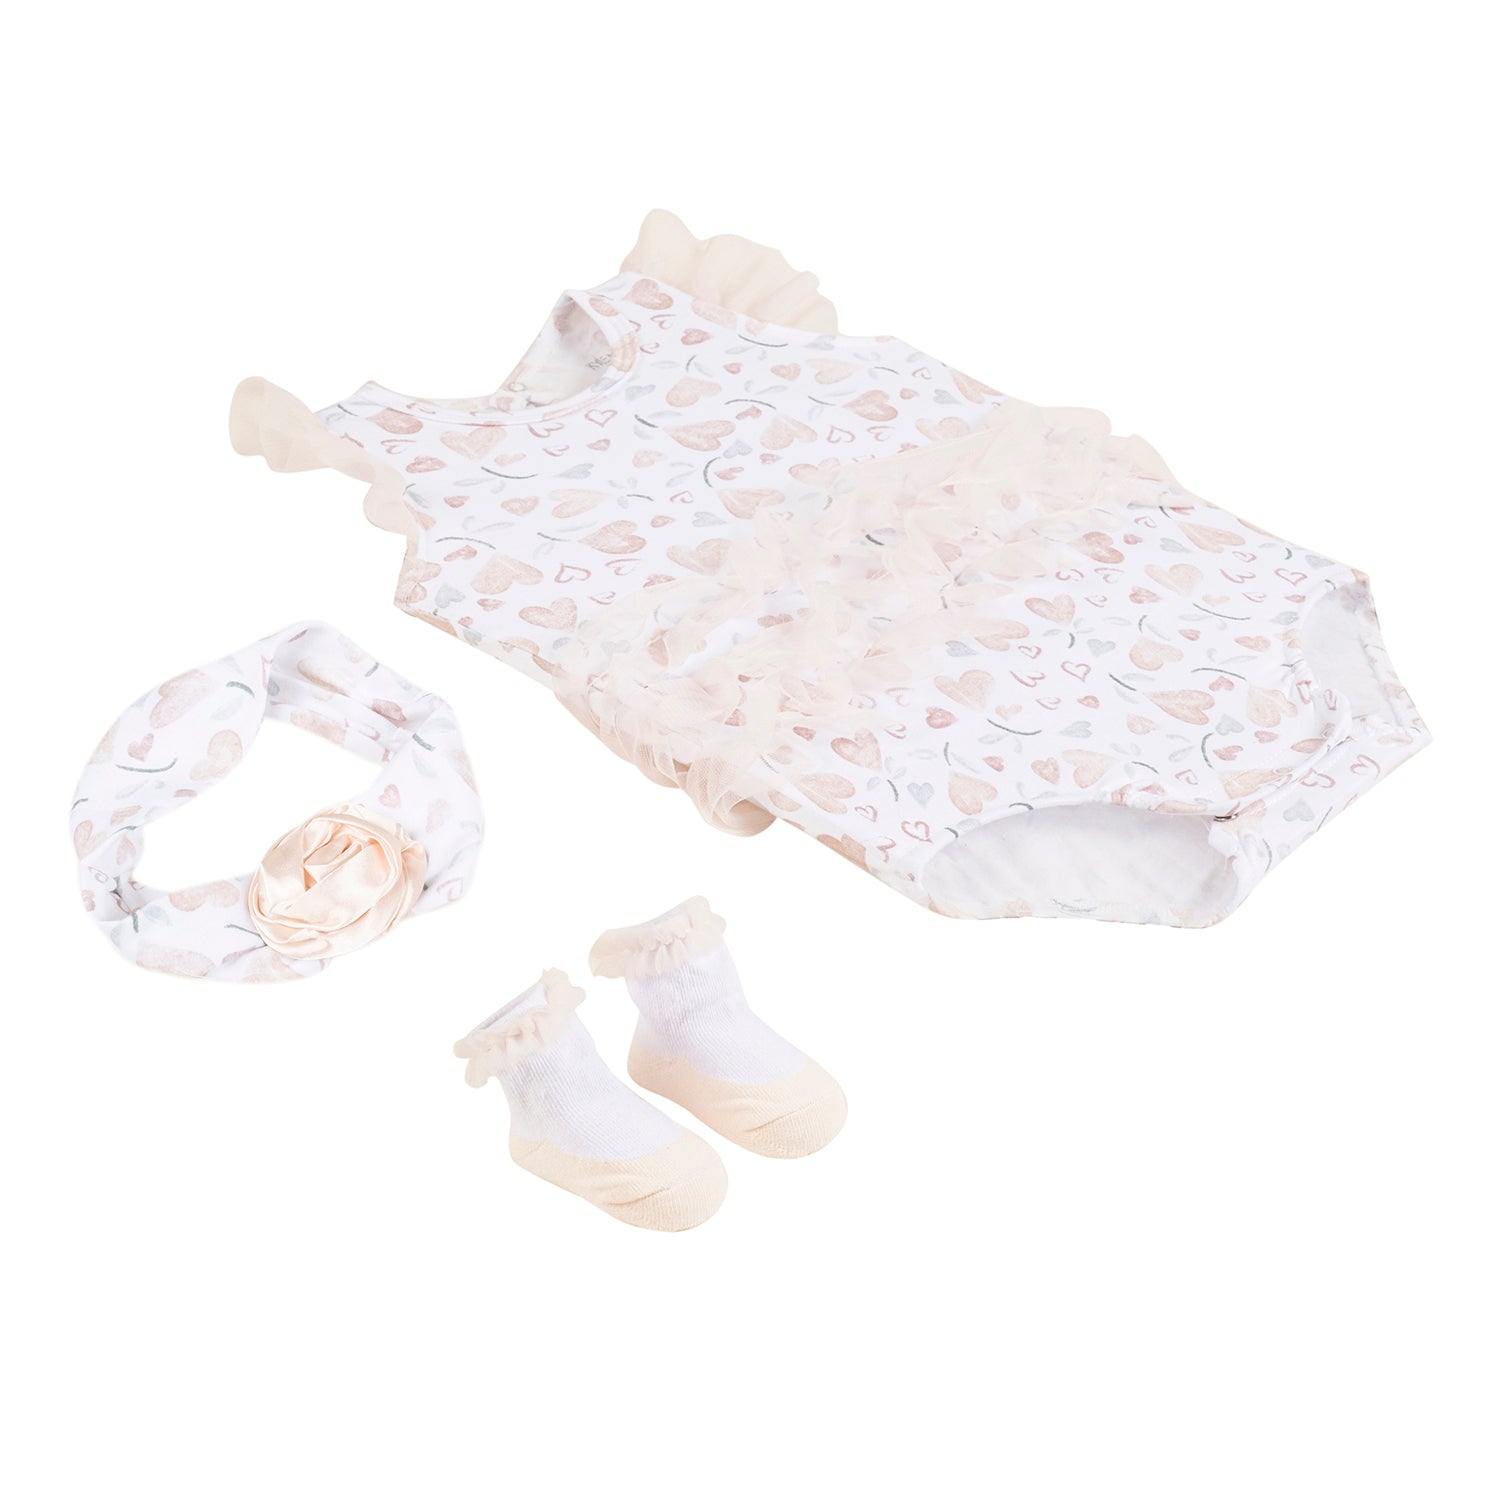 Baby Moo My Little Heart Gift Set 3 Piece With Bodysuit, Socks And Headband - Beige